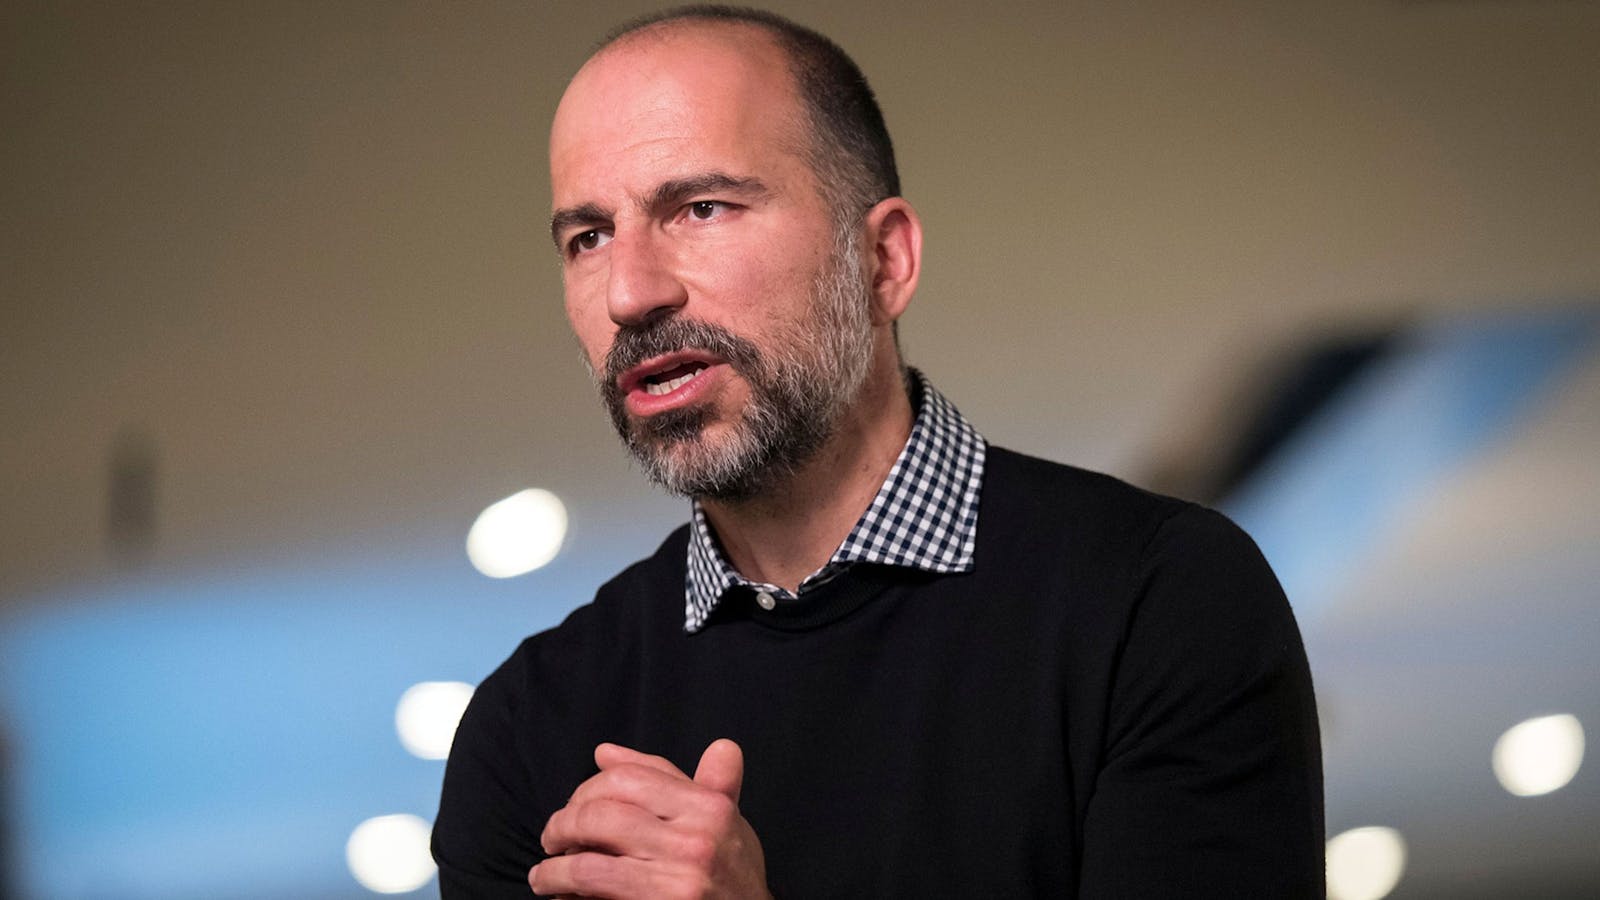 Dara Khosrowshahi, CEO of Uber. Photo by Bloomberg